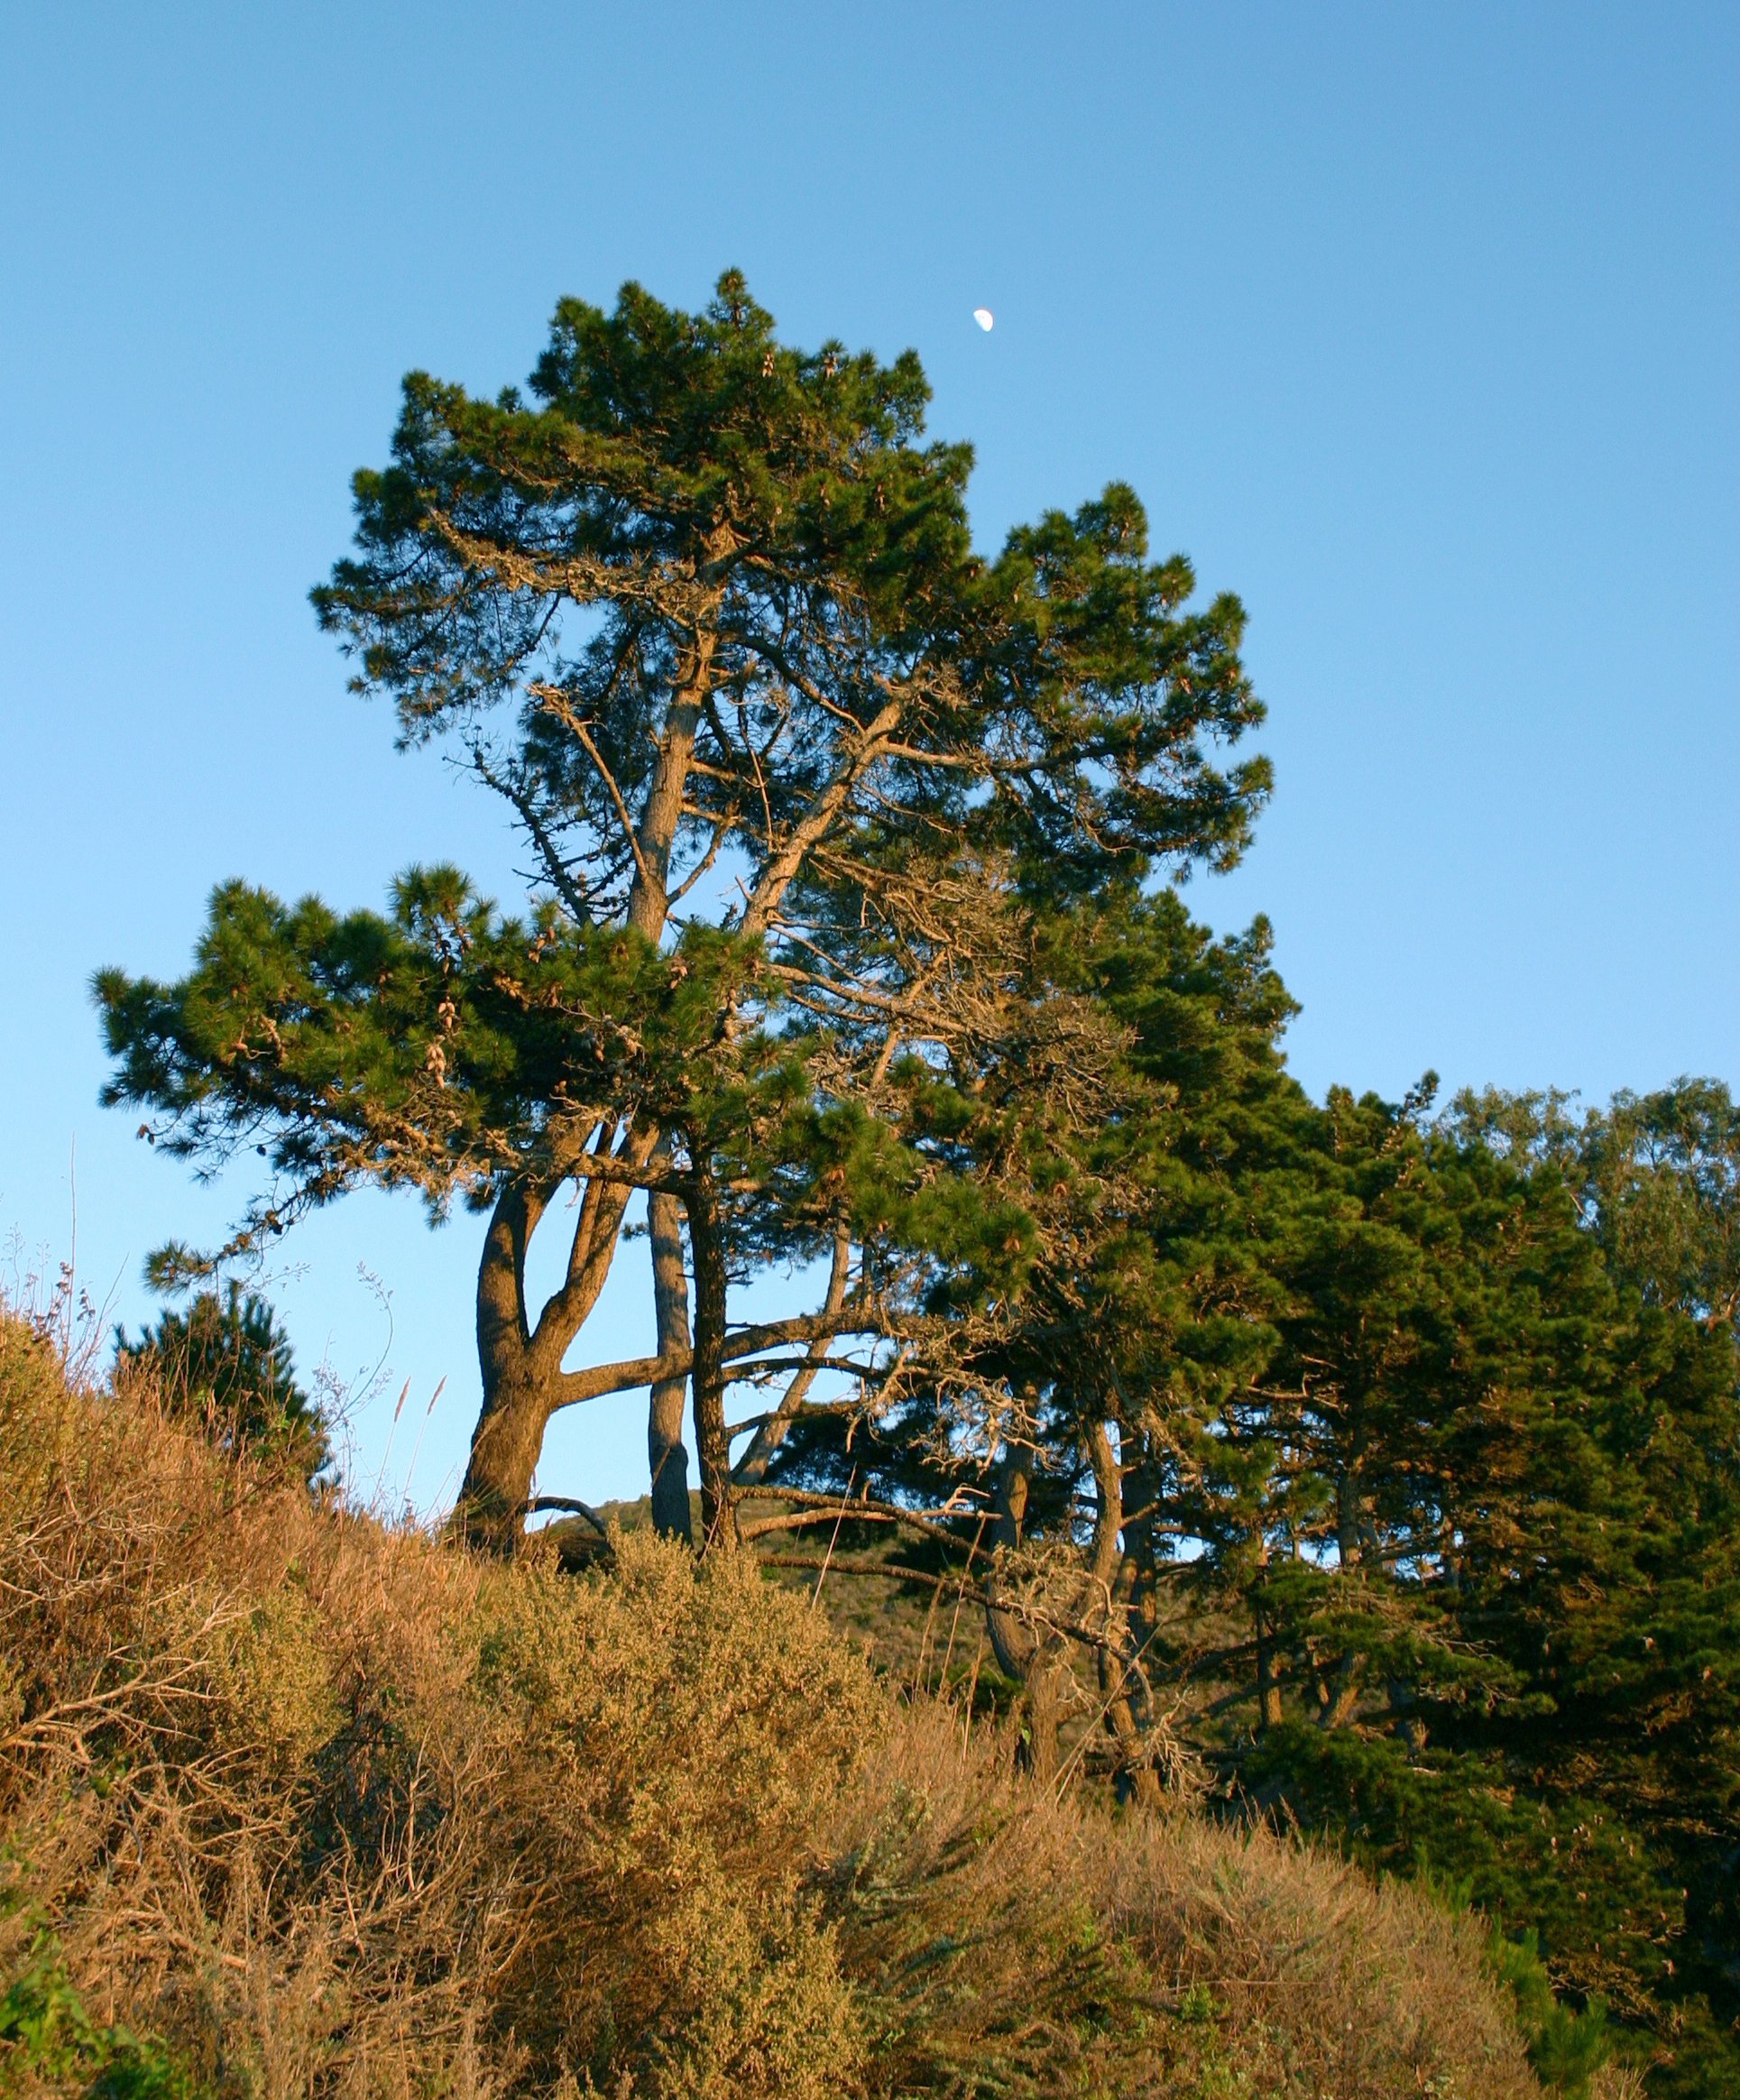 Monterey pine (Pinus radiata). Image credit: Dalveniah on Flickr, CC by SA 2.0